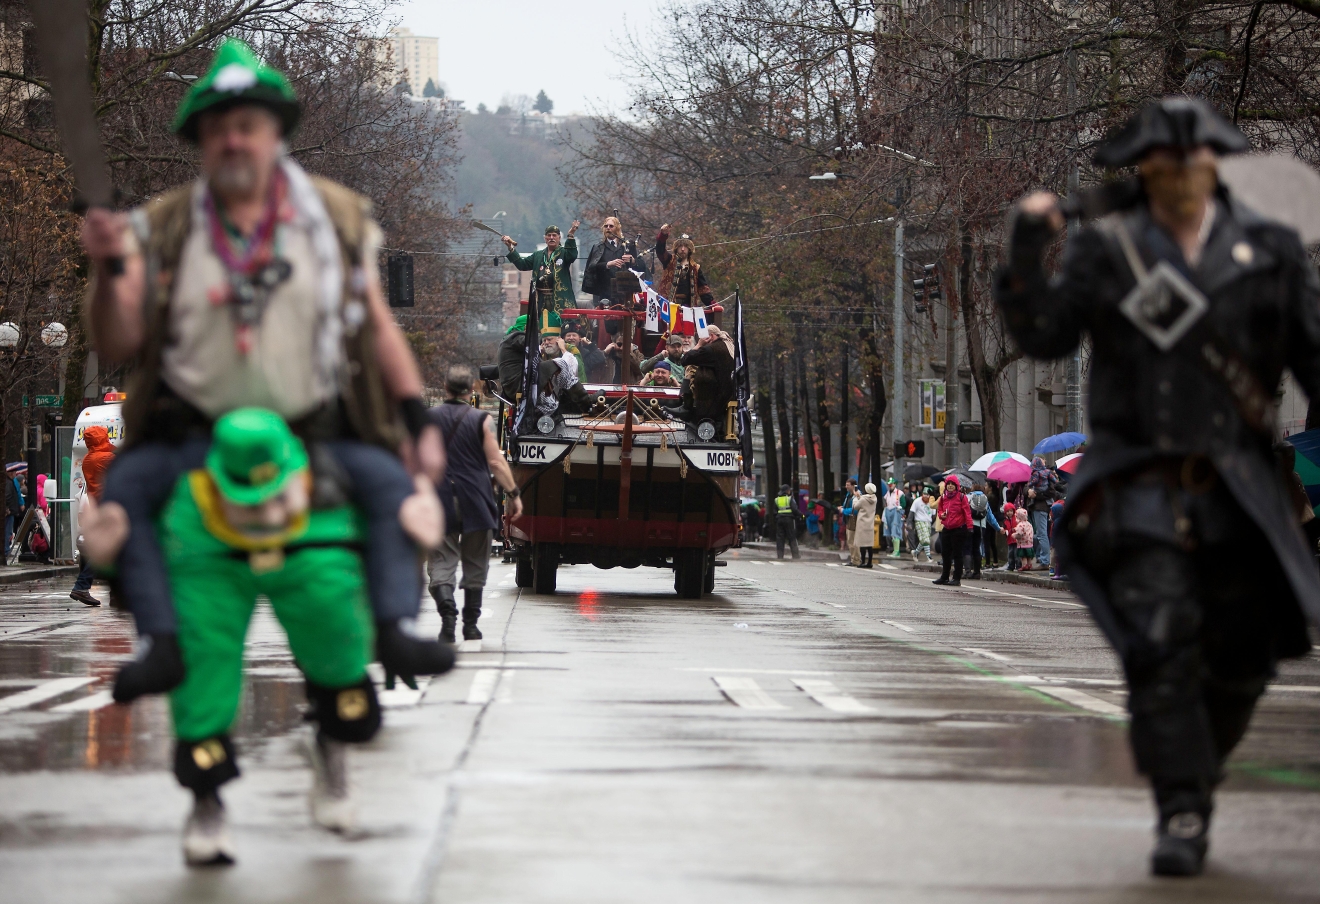 Photos Rain, Shmain! Crowds flock downtown to 2017 St. Patrick’s Day